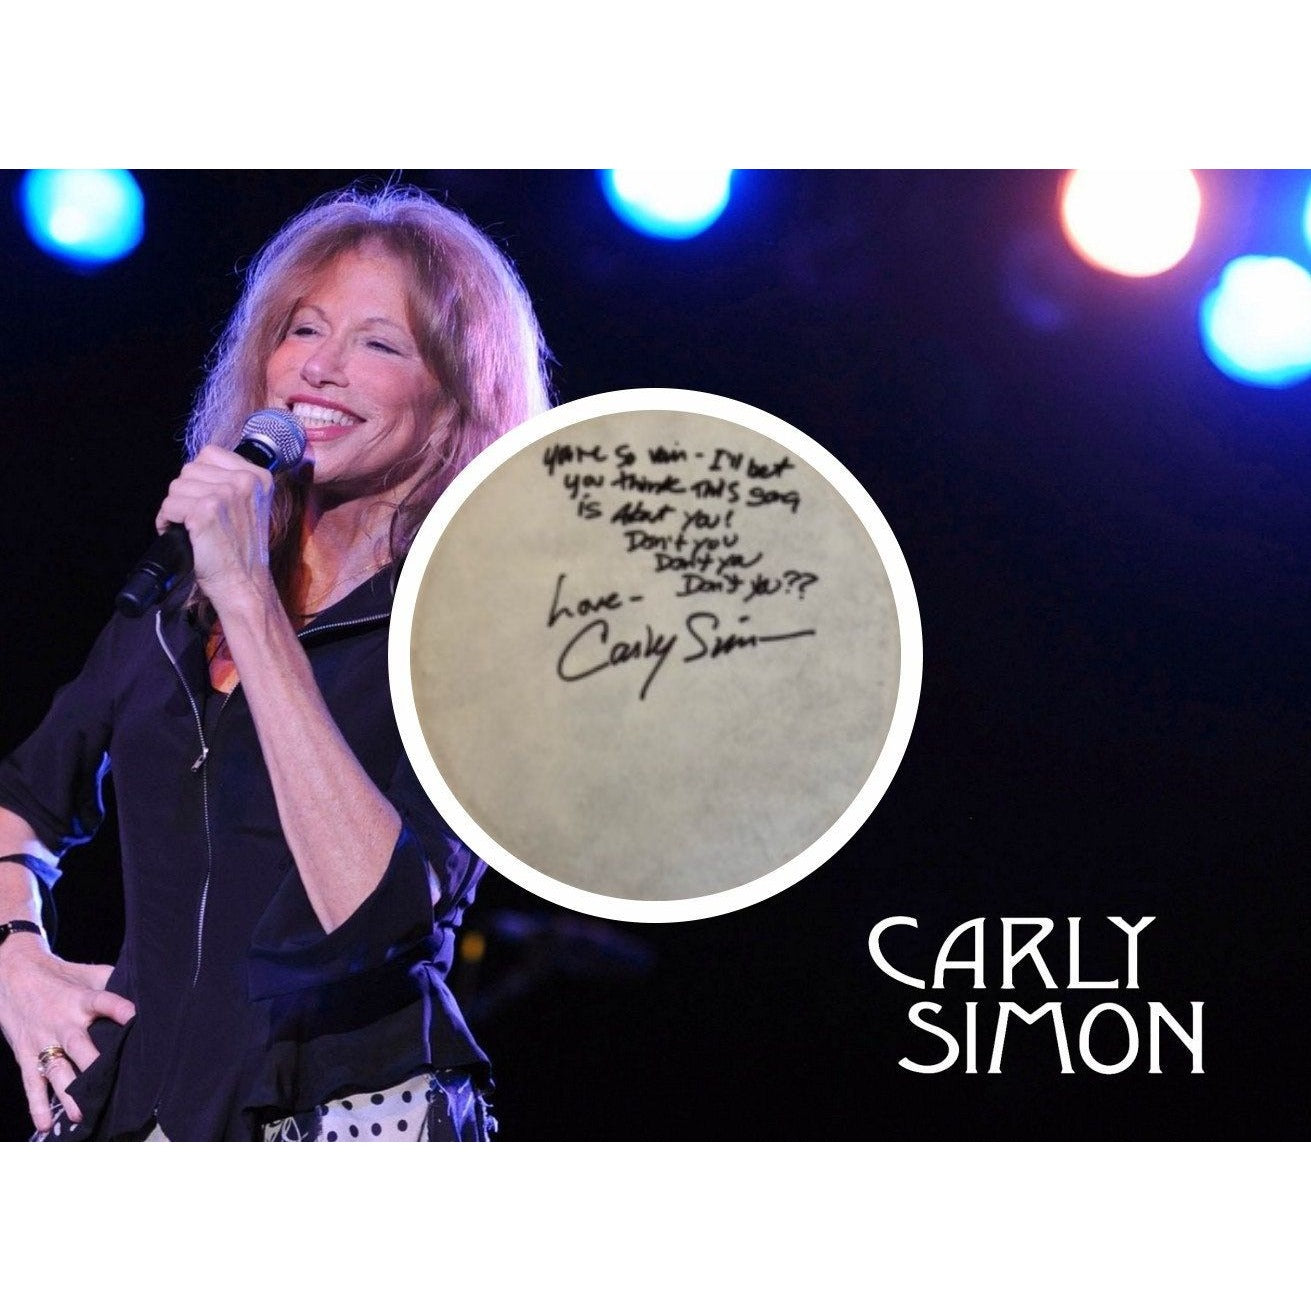 Carly Simon tambourine signed with lyrics